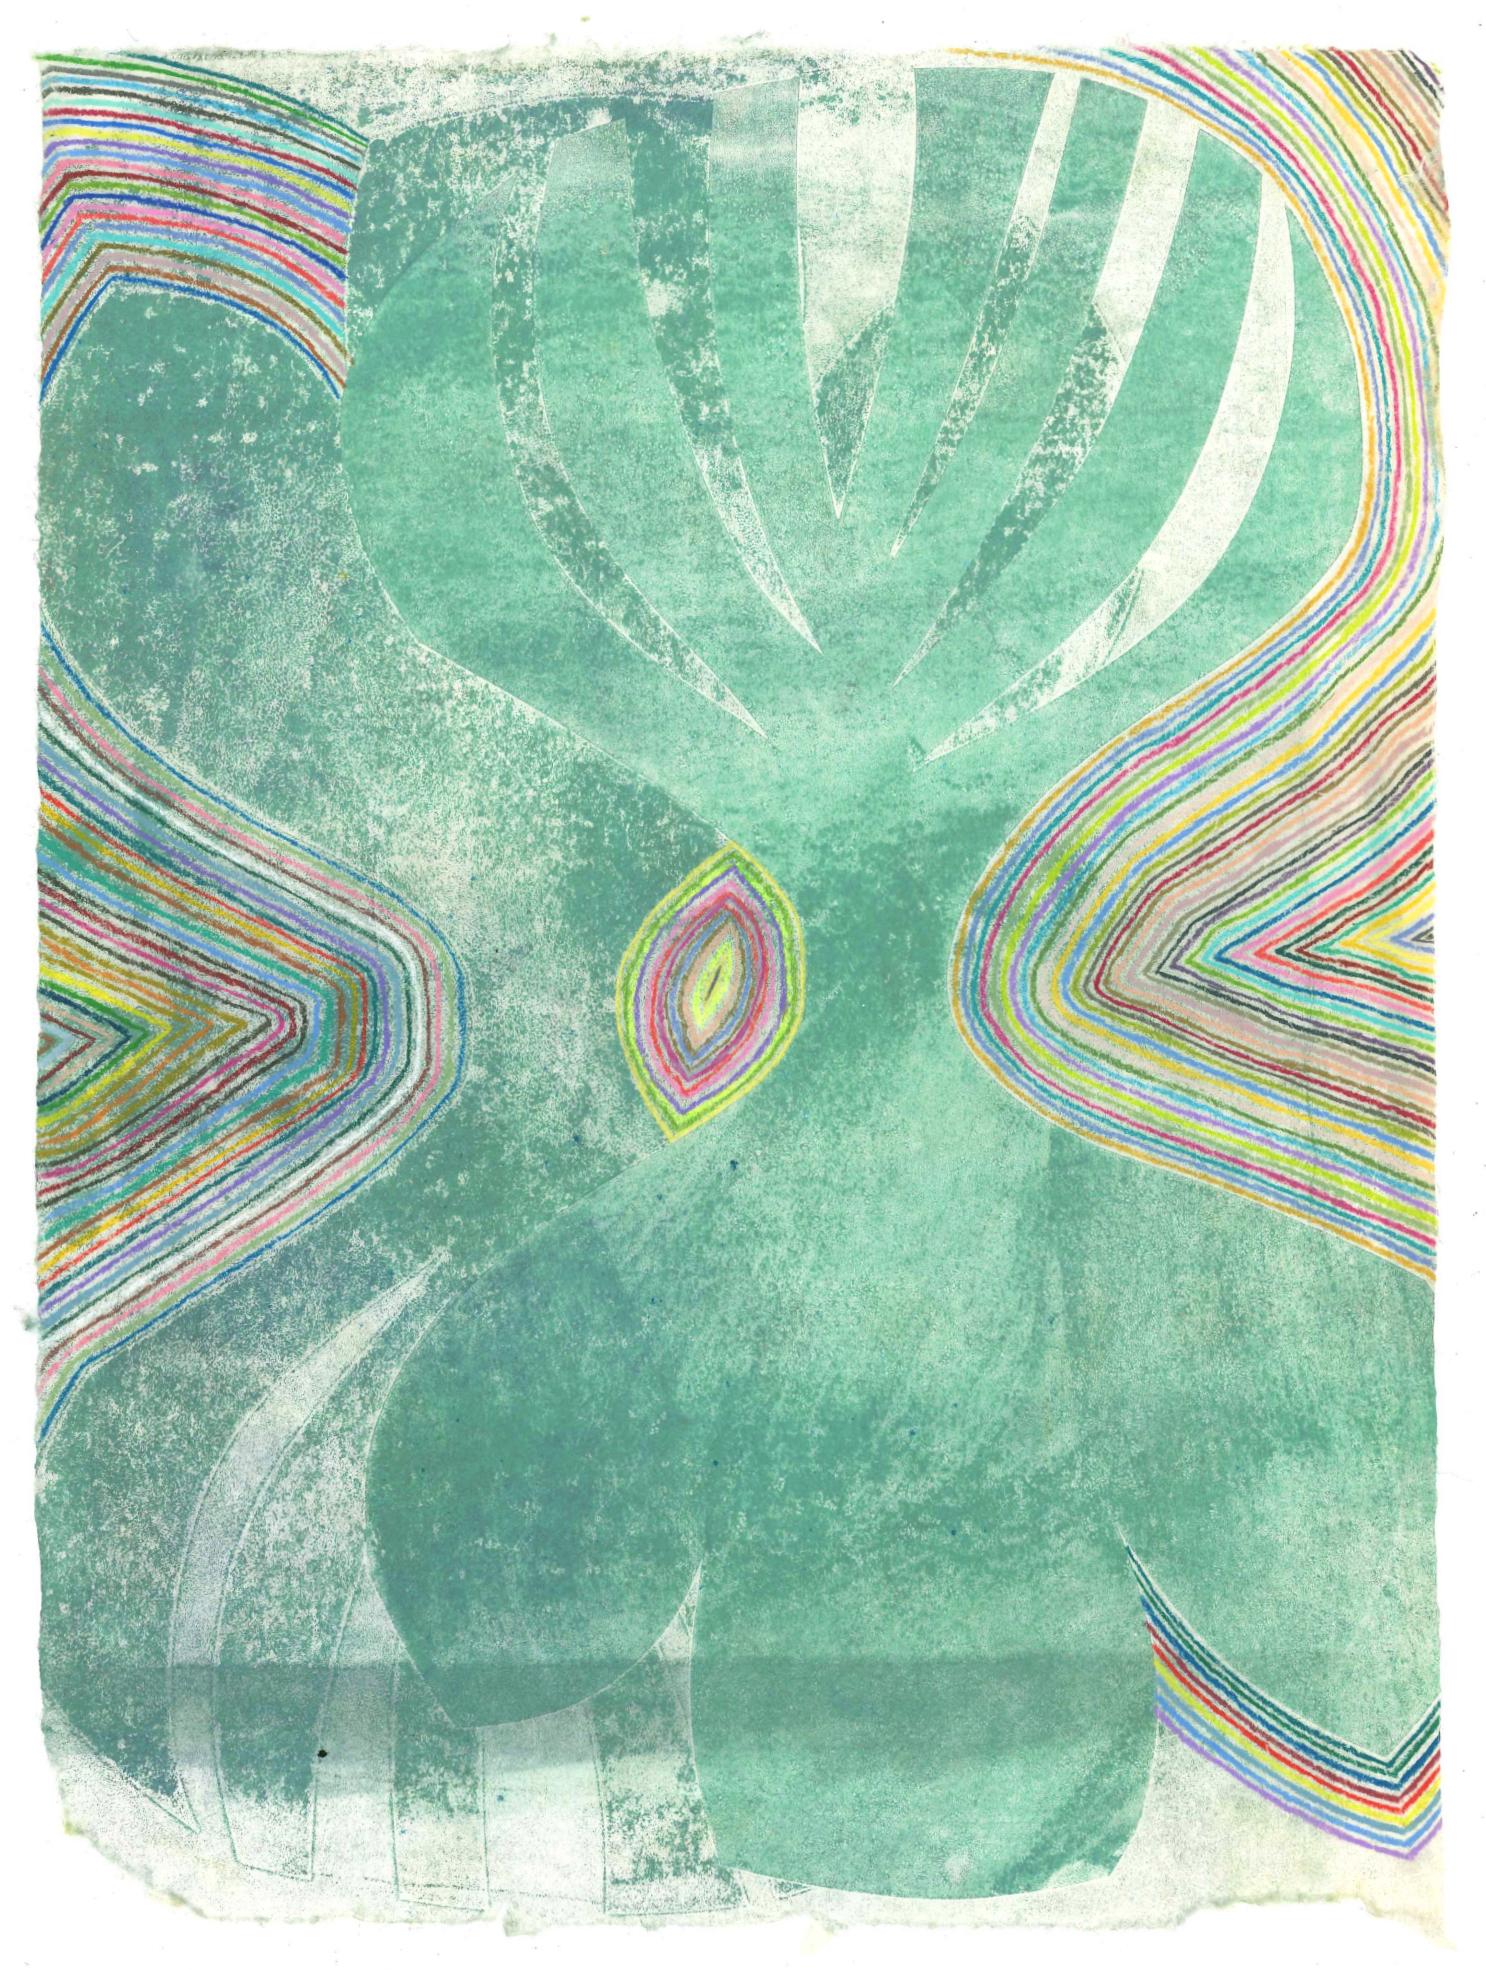 'Fishtail' - organic abstraction - monotype - rainbow - Agnes Pelton - Art by Claire Whitehurst